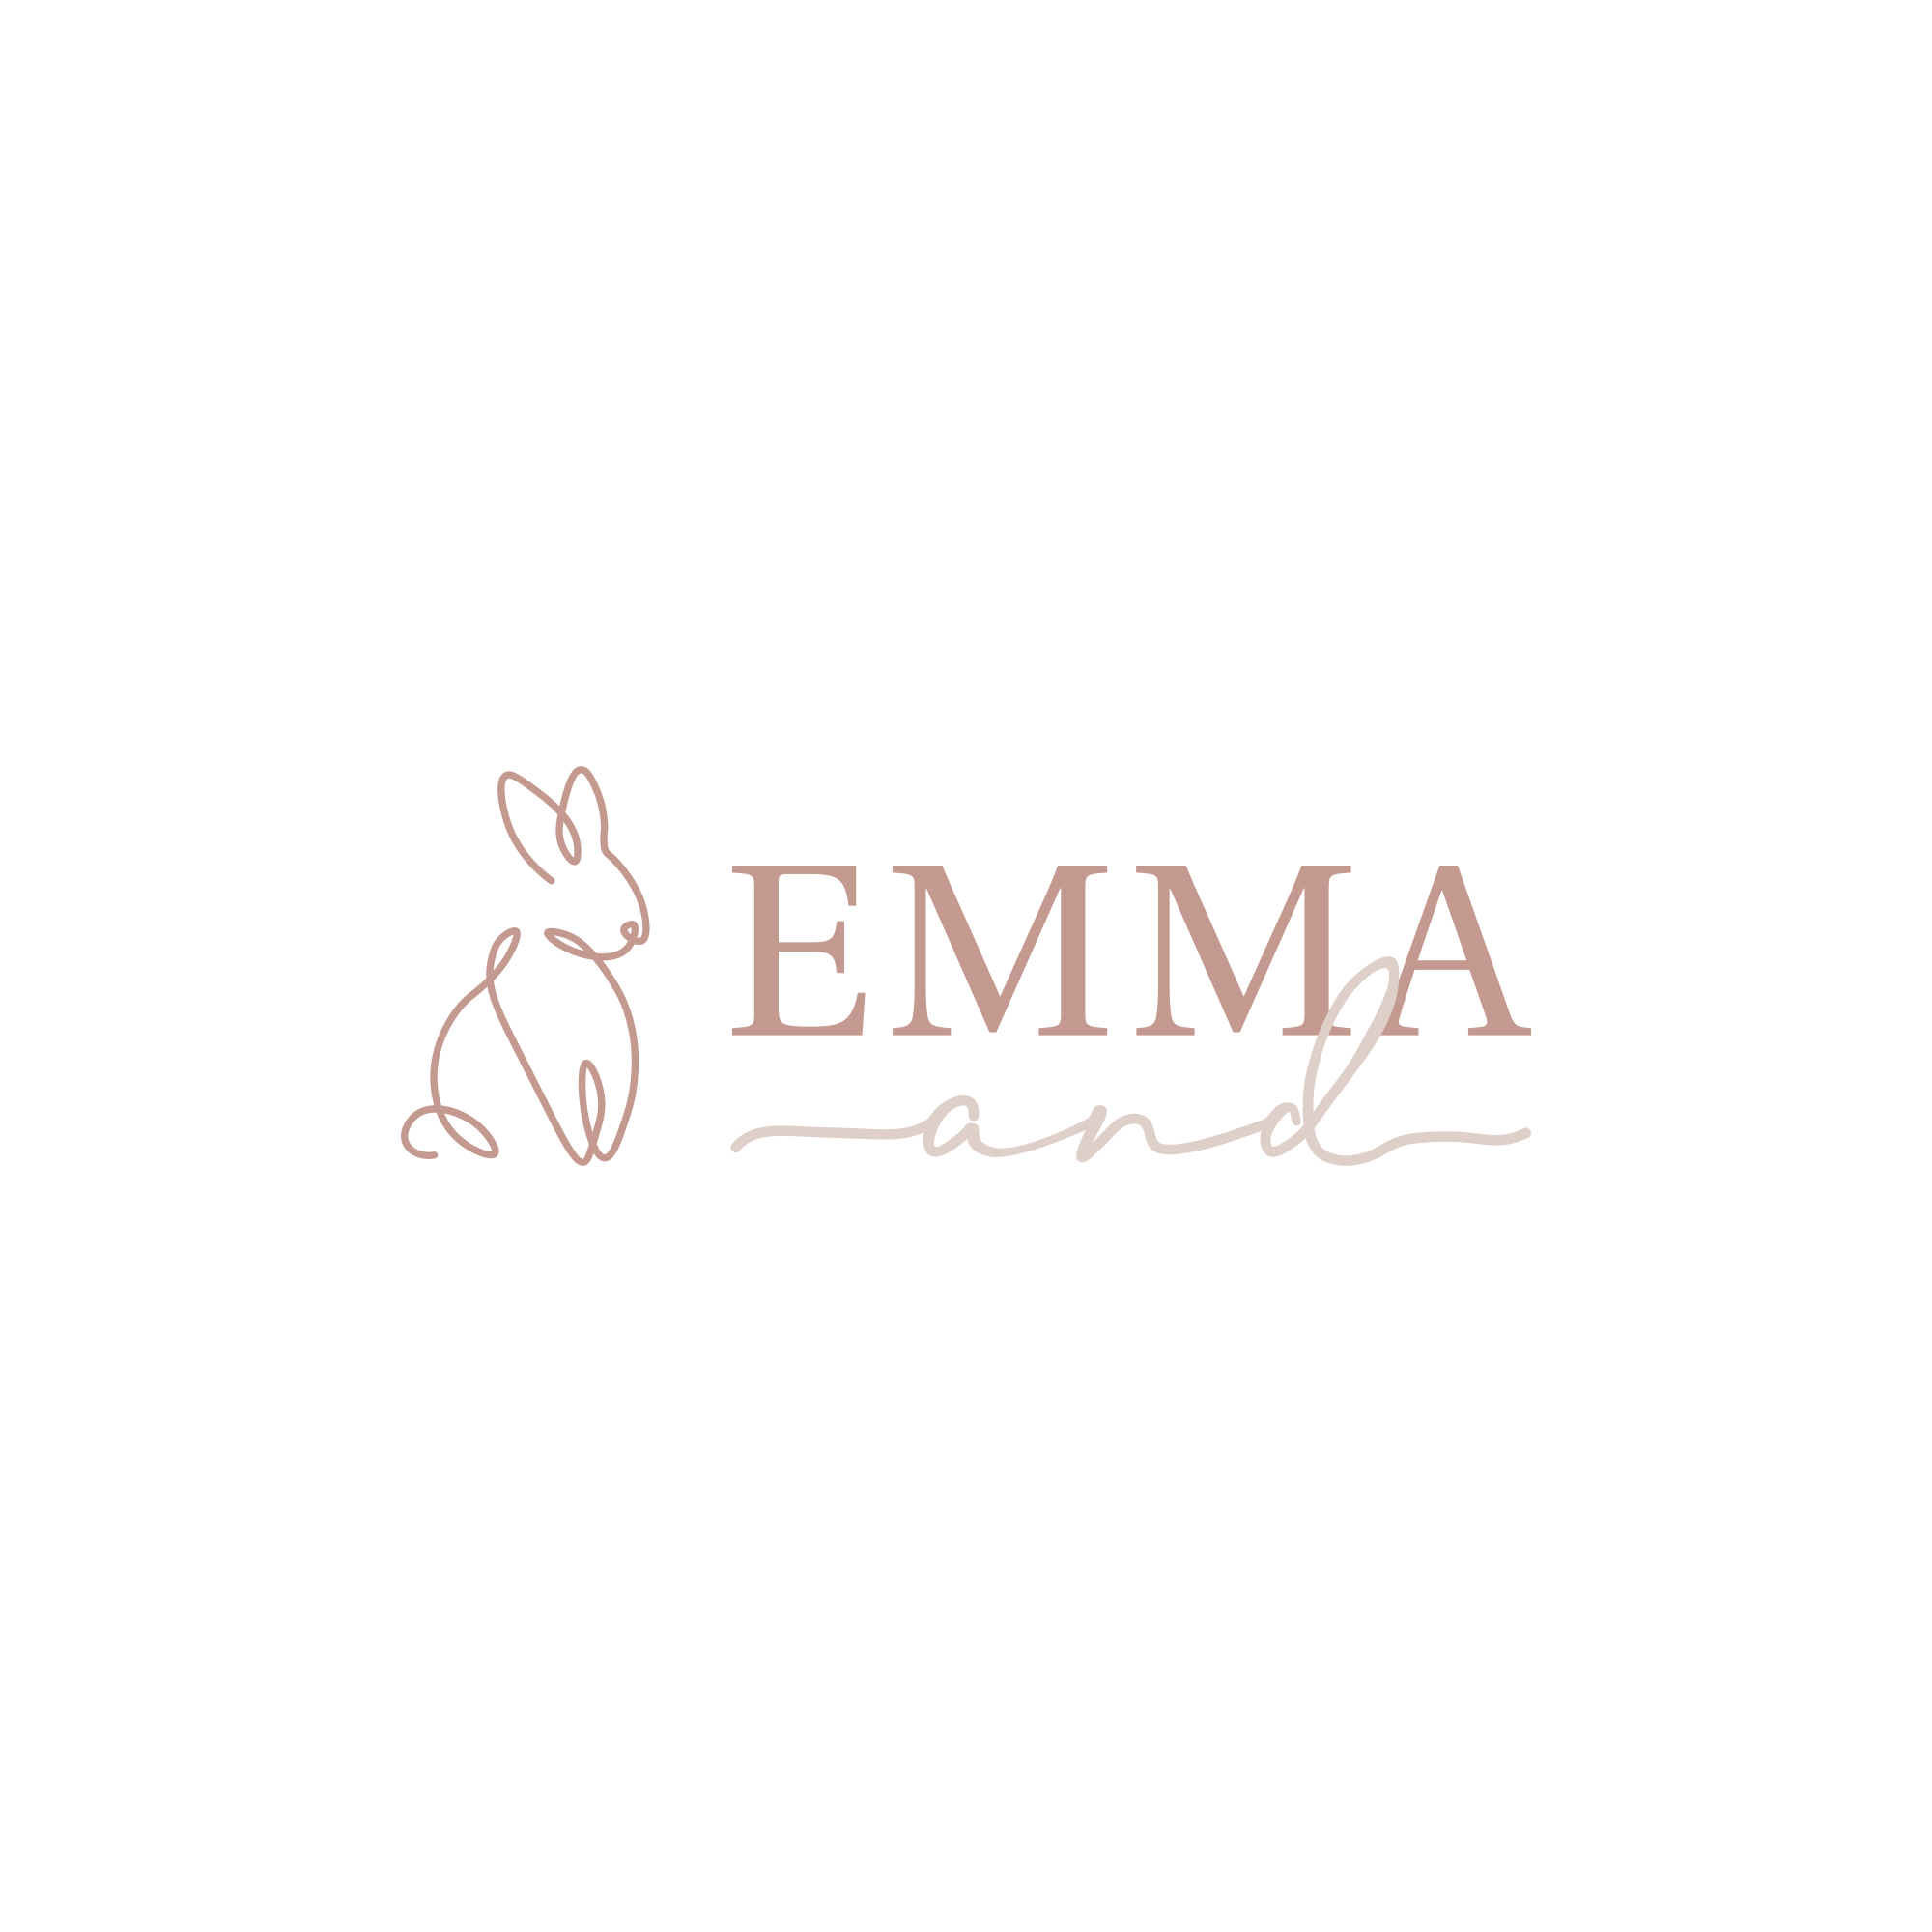 EMMA and